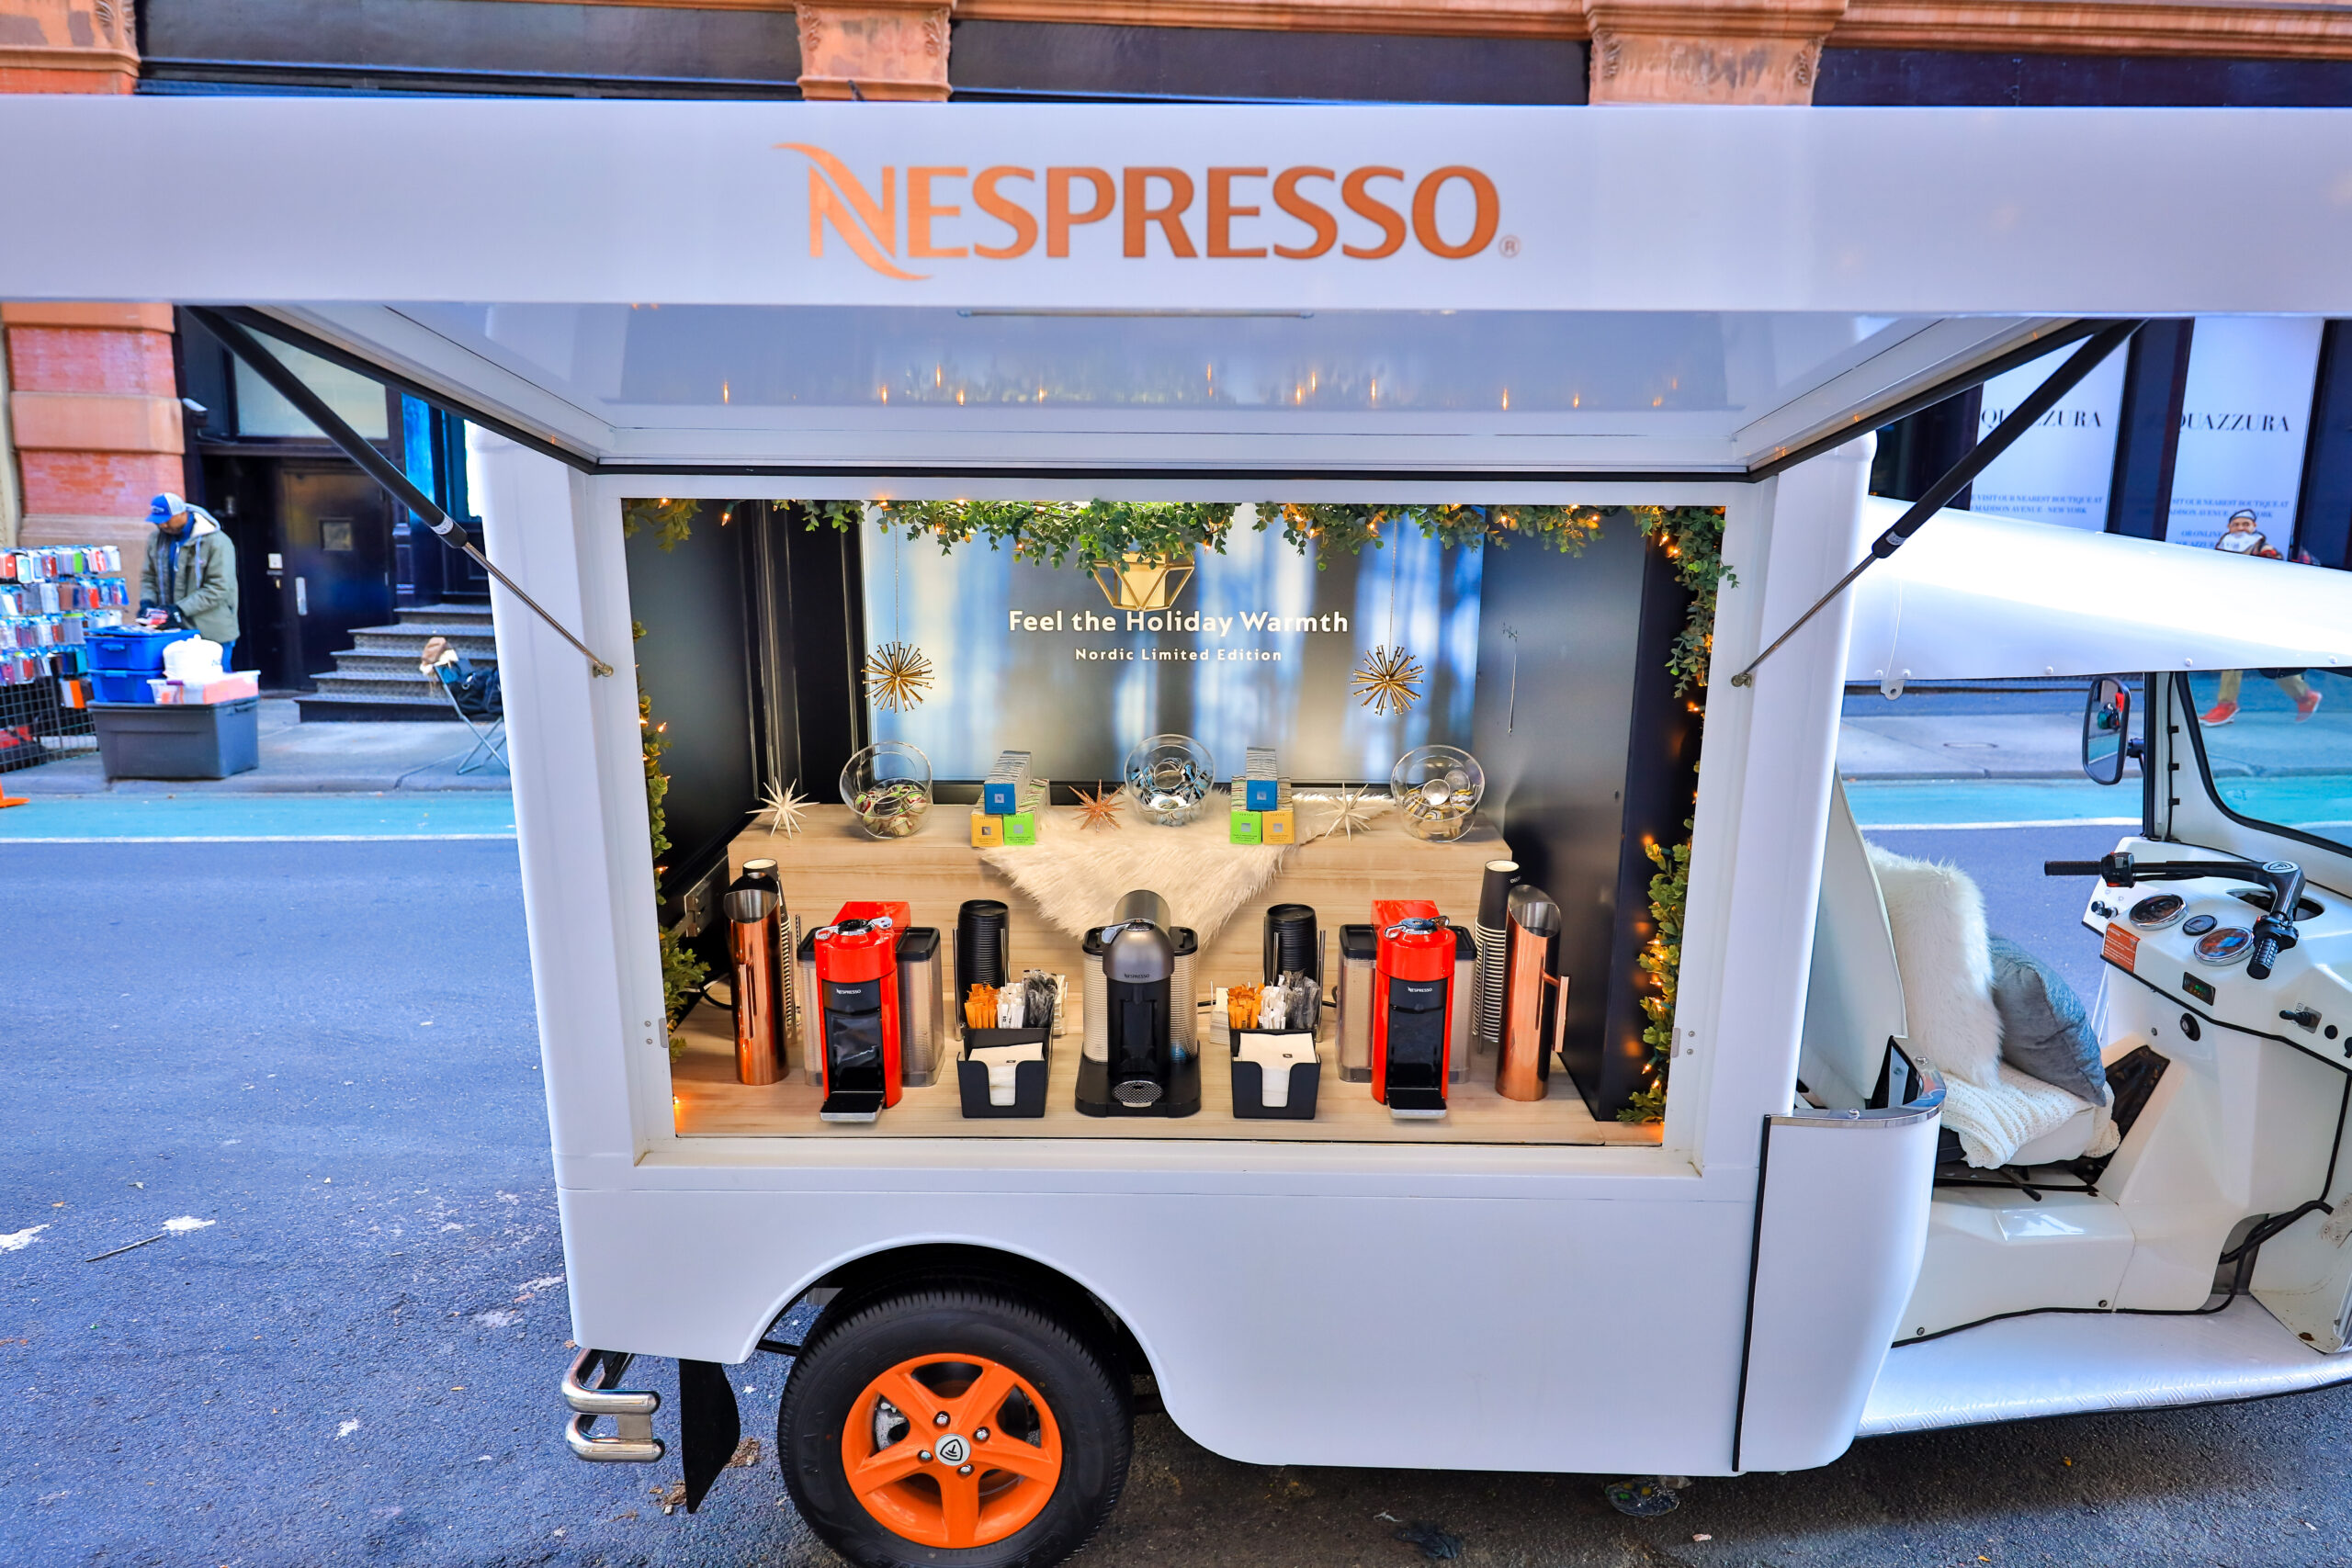 Nespresso Experiential Marketing Strategy